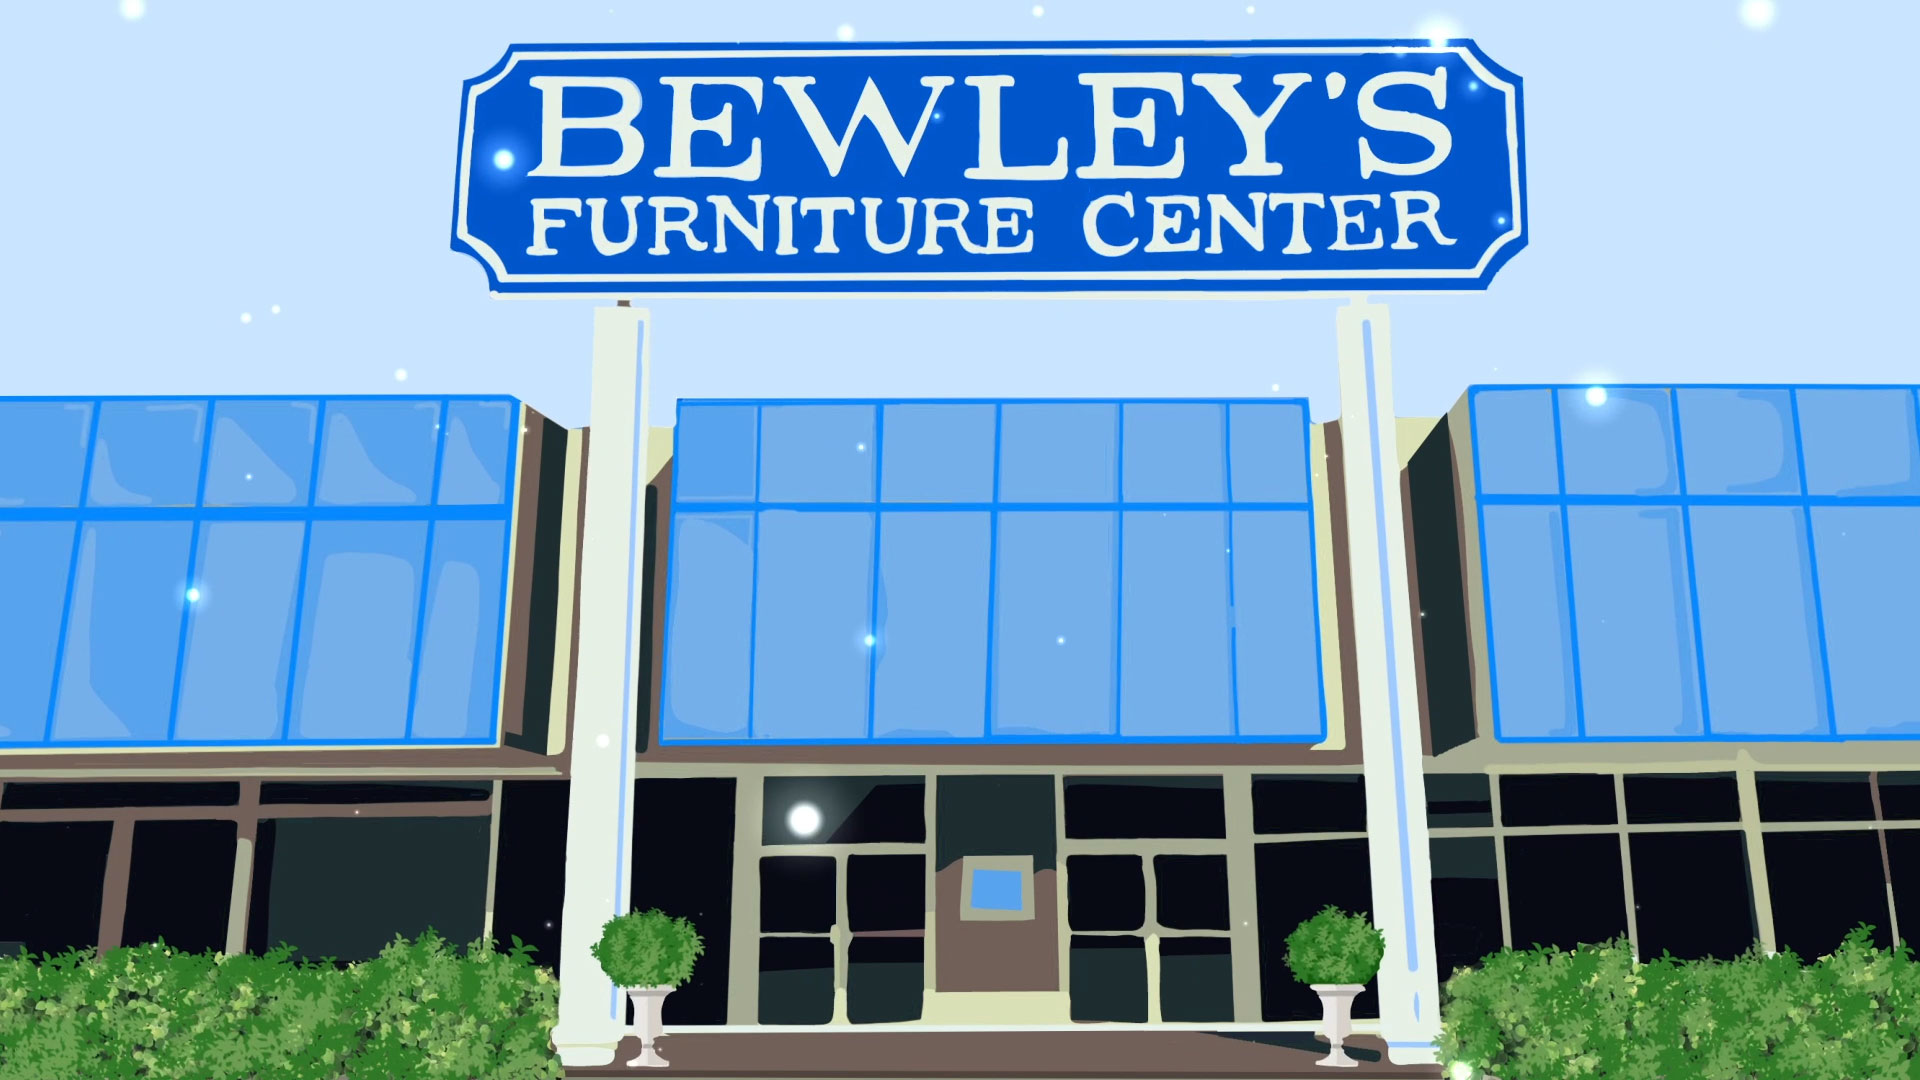 Bewley's Furniture Showroom